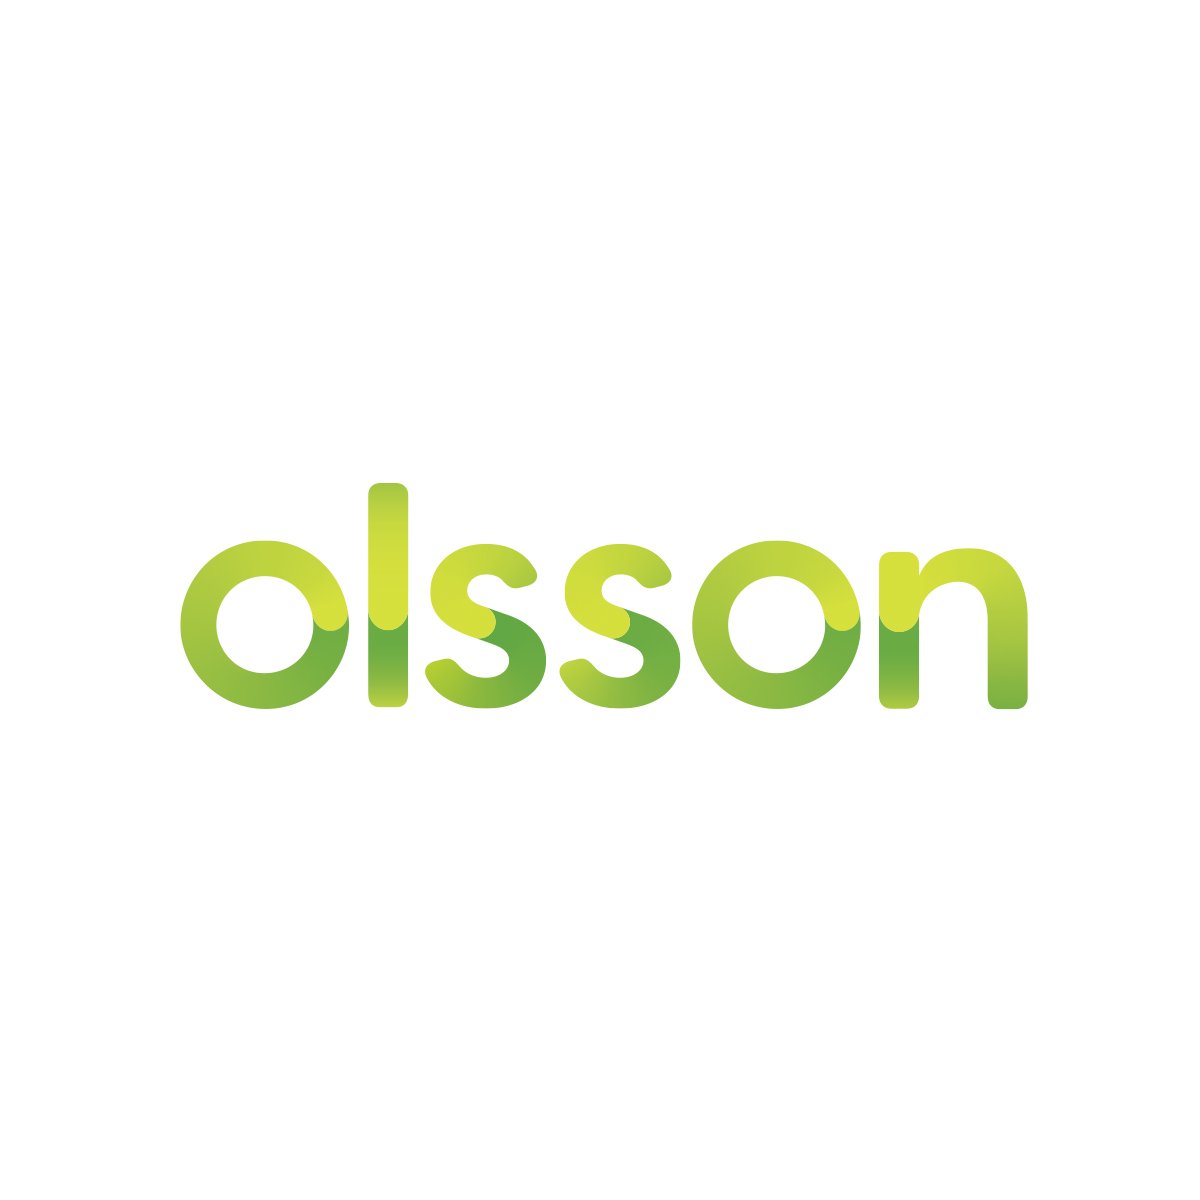 Olsson logo.jpg